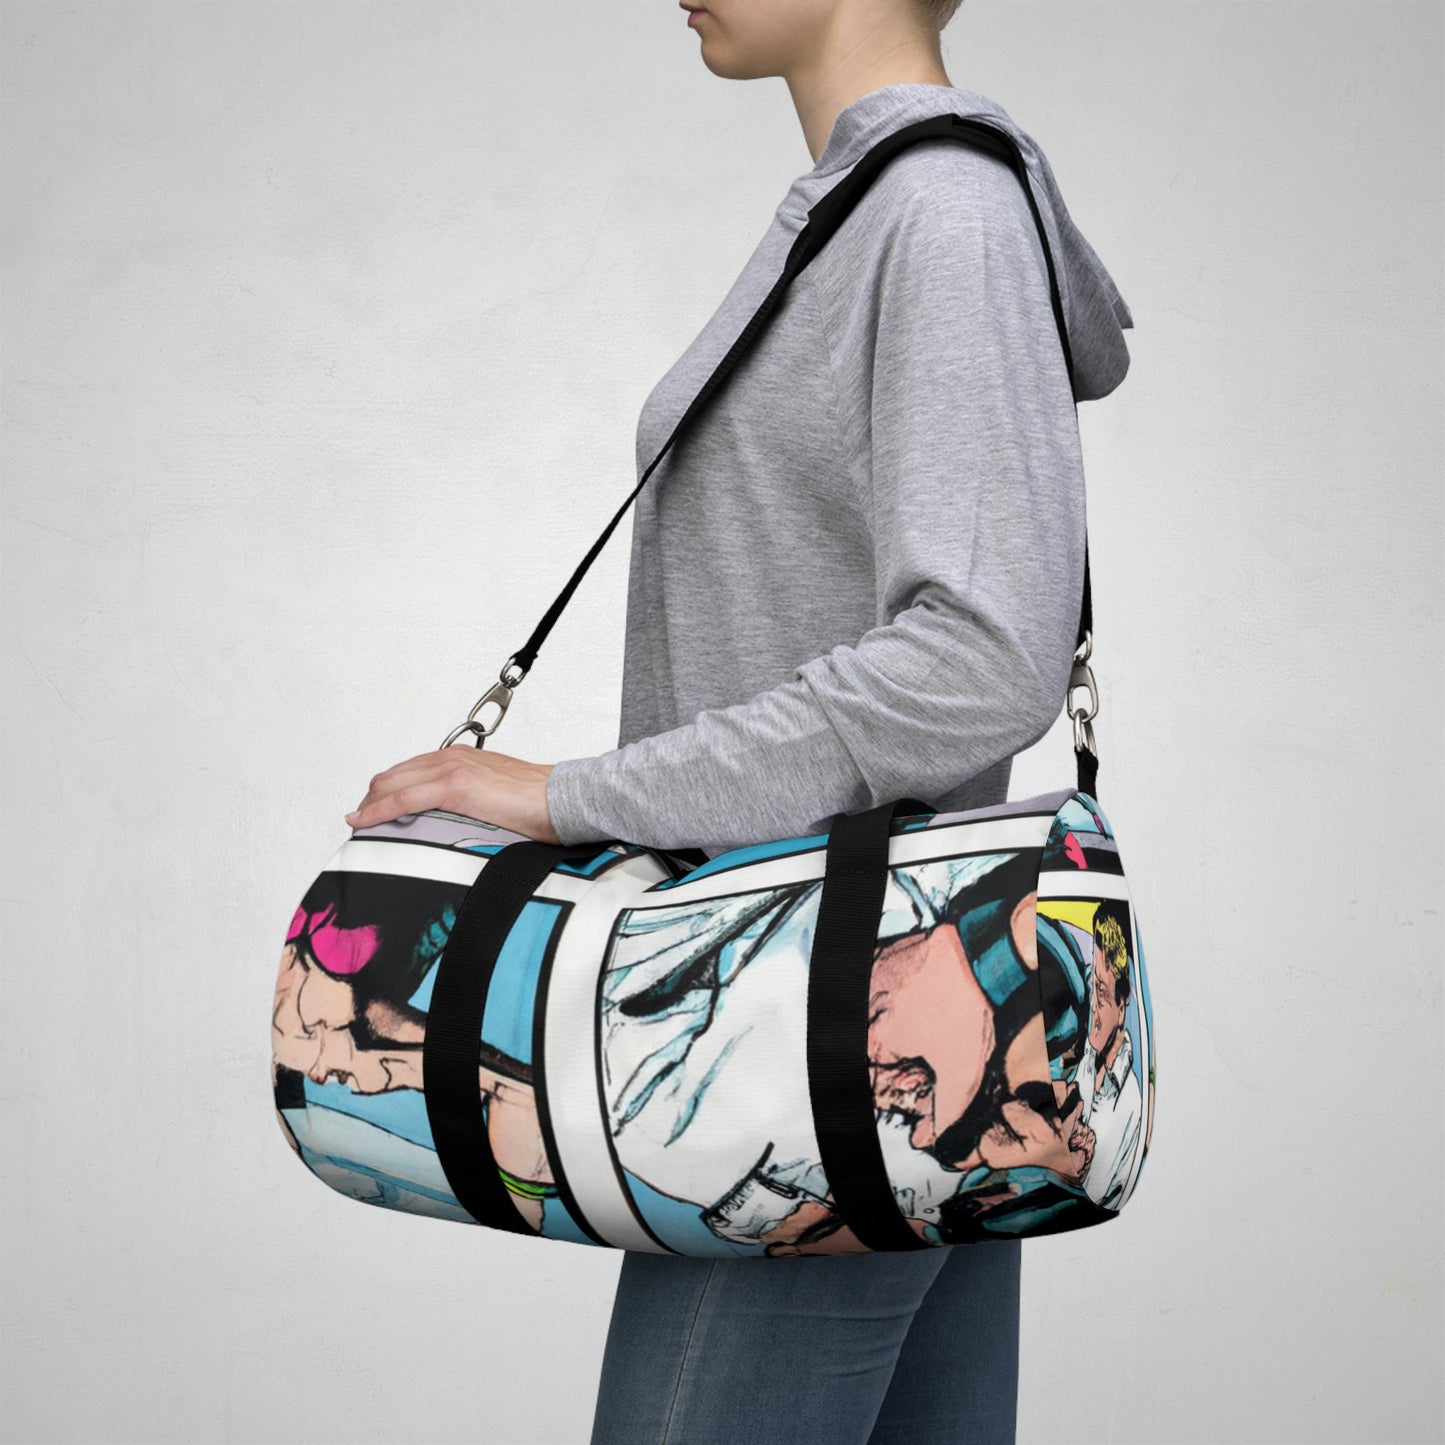 Lydia Cole, Luxury Duffle Bag Designer - Comic Book Duffel Bag